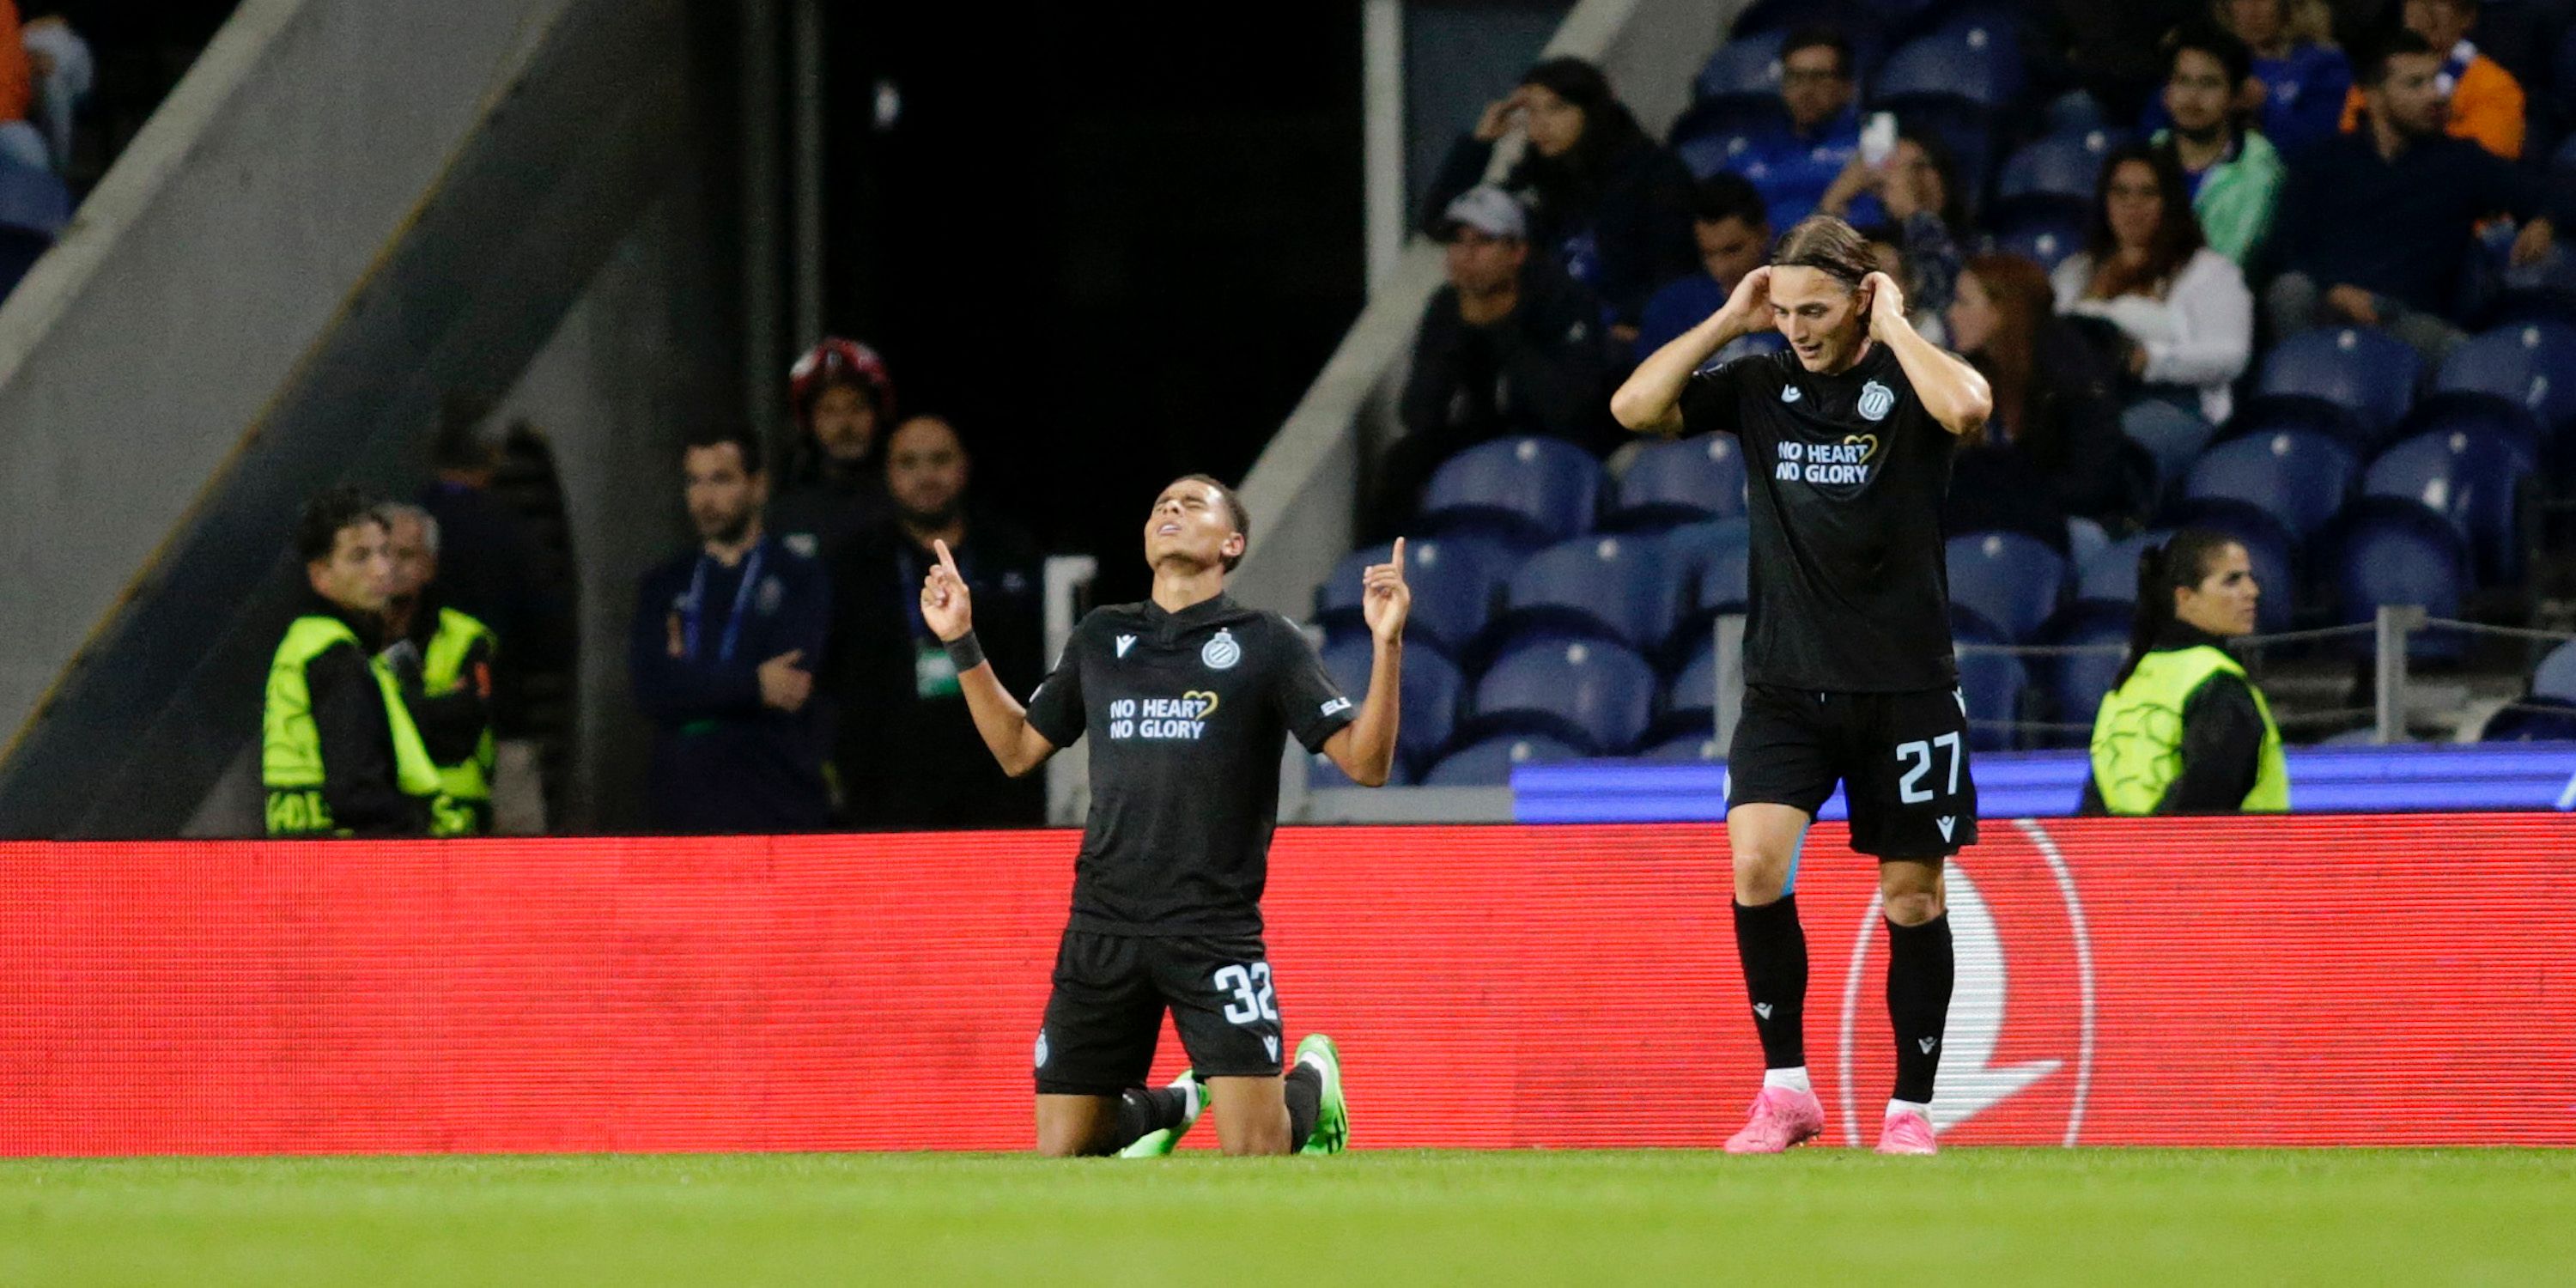 Club Brugge's Antonio Nusa celebrates scoring their fourth goal with Casper Nielsen